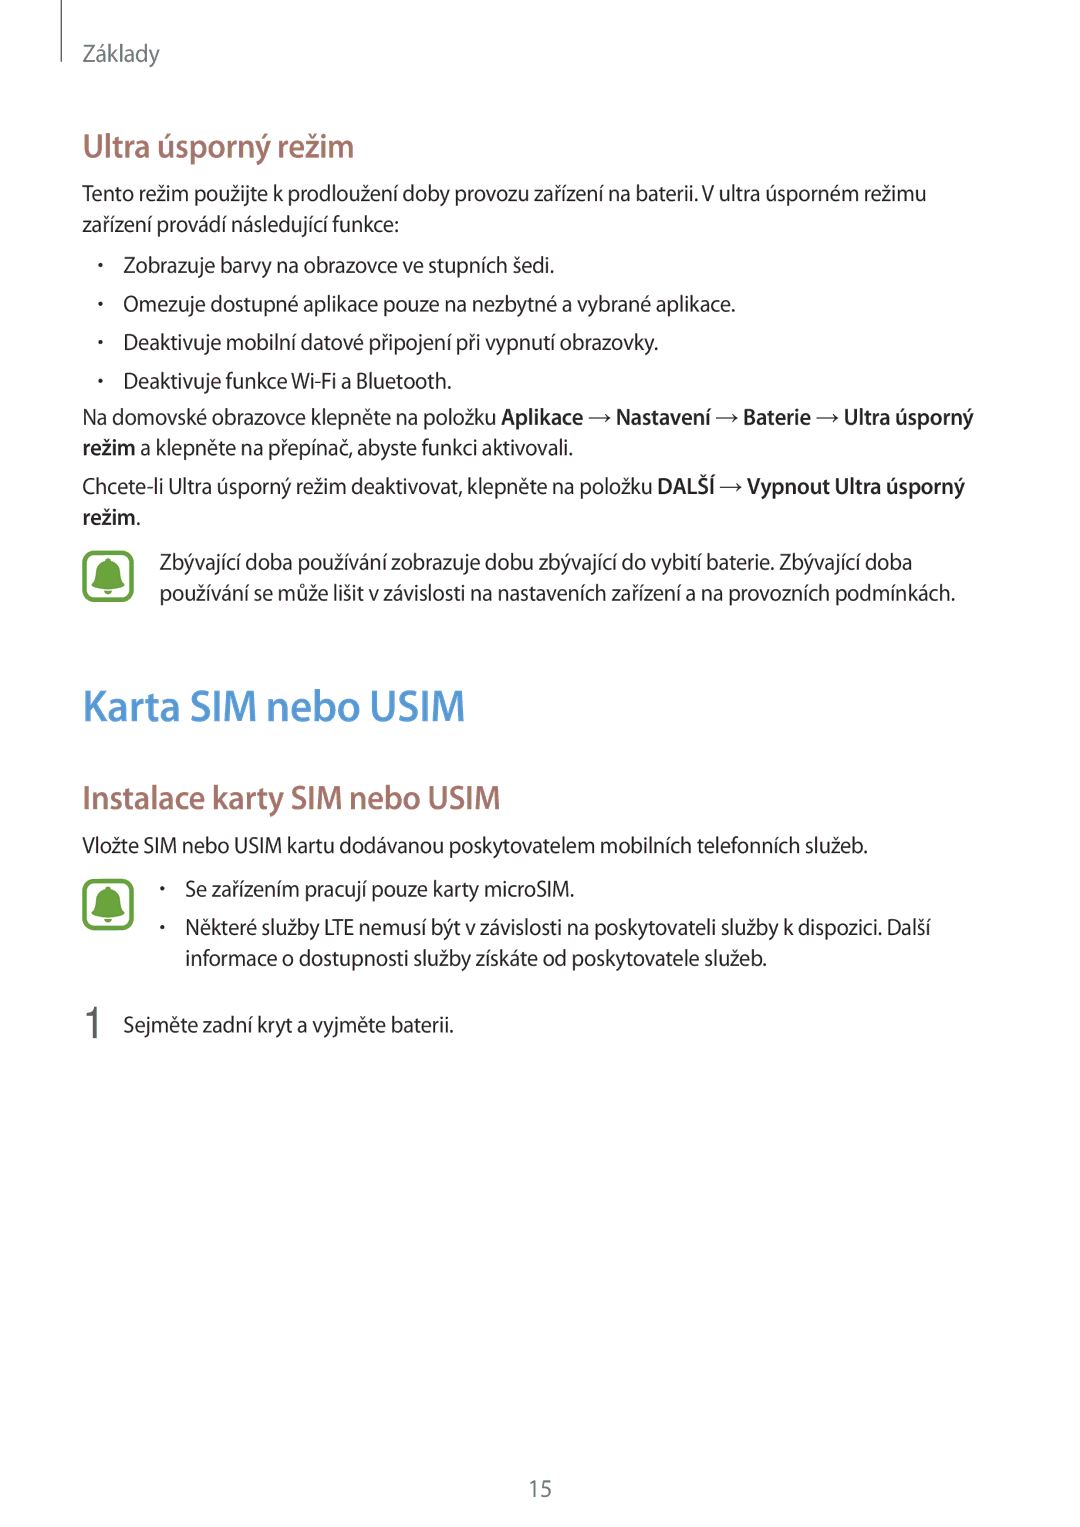 Samsung SM-G903FZSAETL manual Karta SIM nebo Usim, Ultra úsporný režim, Instalace karty SIM nebo Usim 